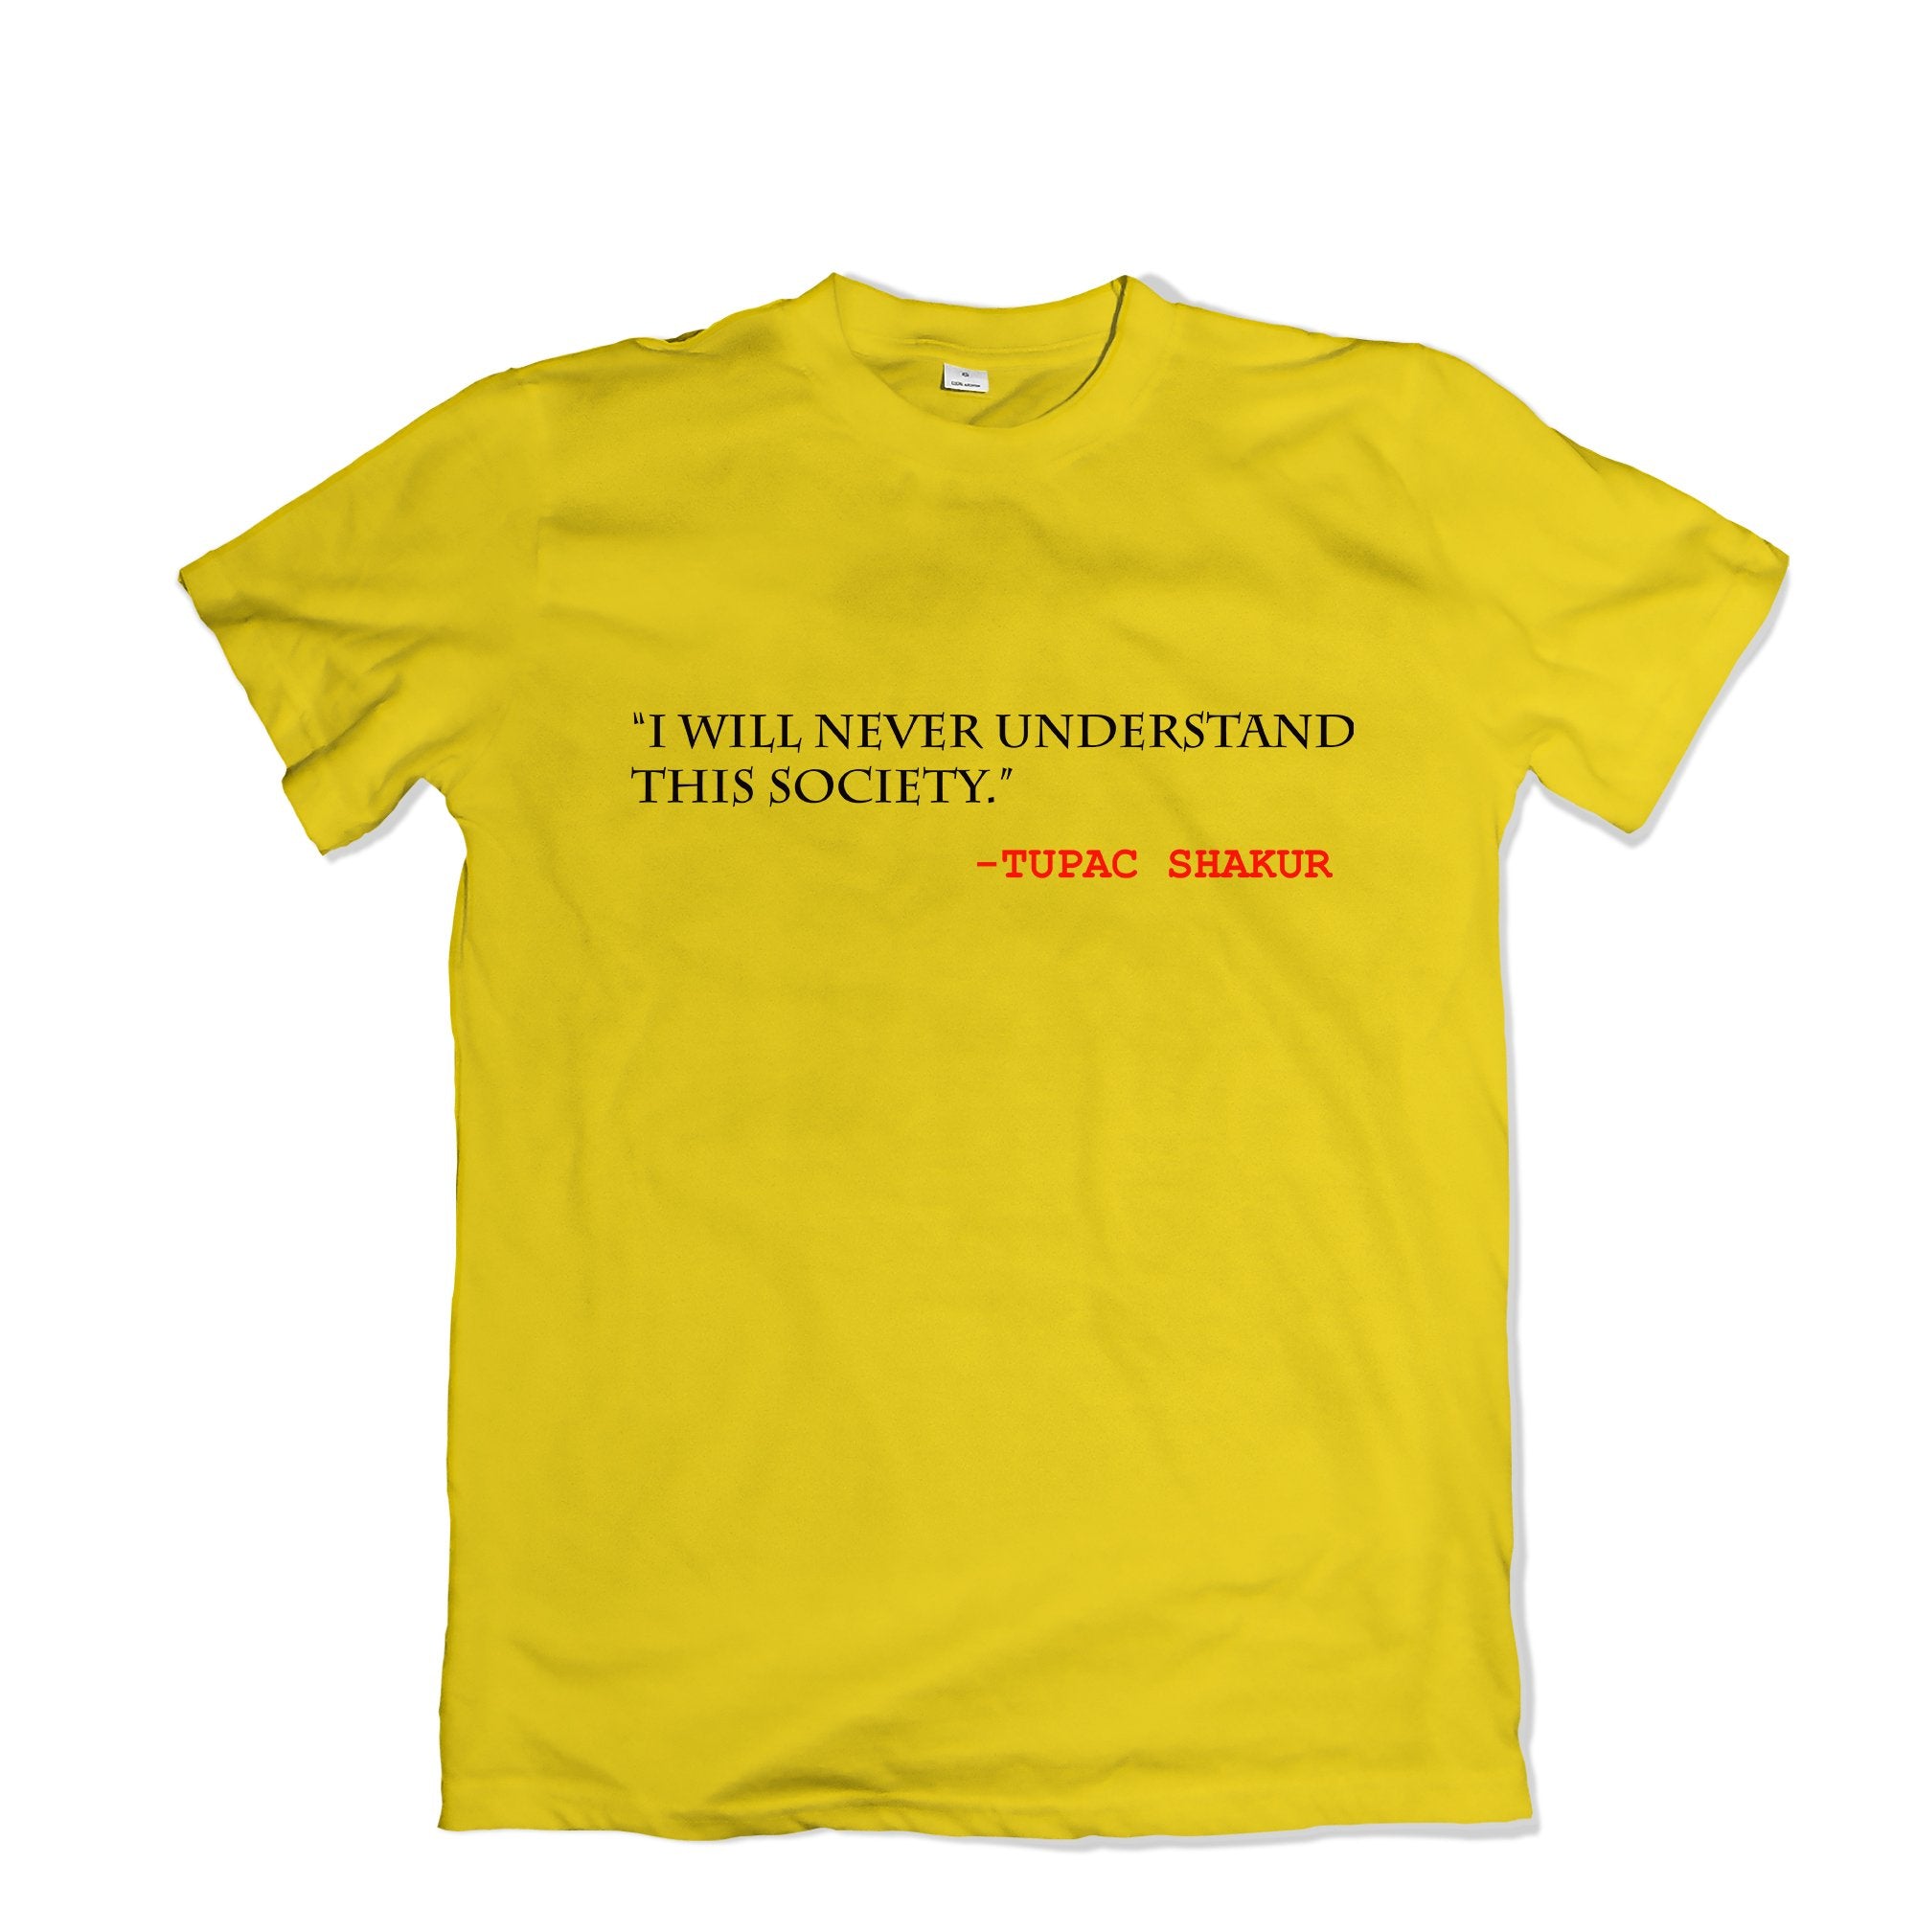 Tupac Society Tee shirt - TOPS, TSS CUSTOM GRPHX, SNEAKER STUDIO, GOLDEN GILT, DESIGN BY TSS